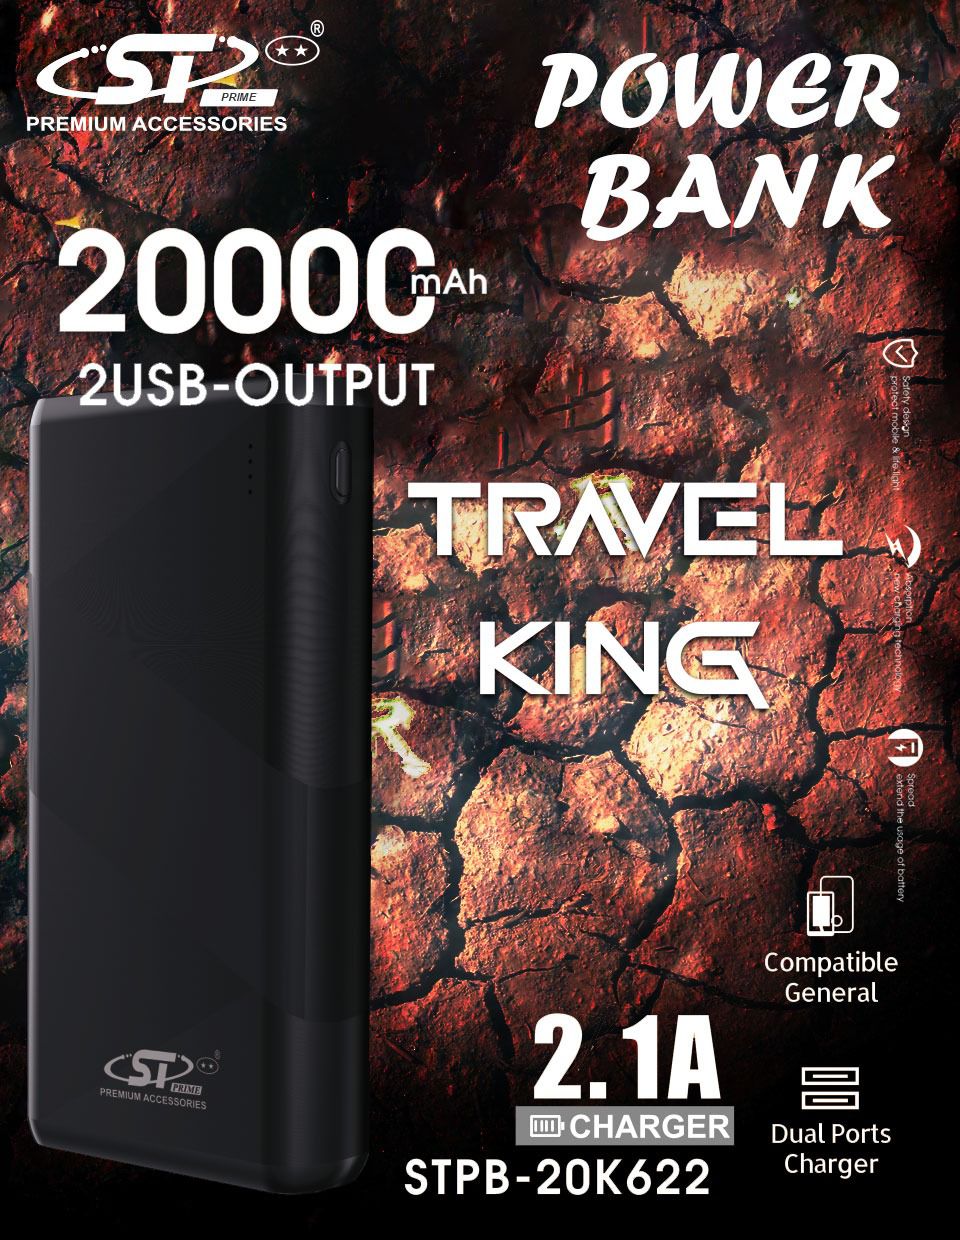 20000 Mah Dual USB Travel Power Bank, Brand: ST Prime, Quantity Slab: 2 Pcs, Models: 20000 Mah Dual USB Travel Power Bank